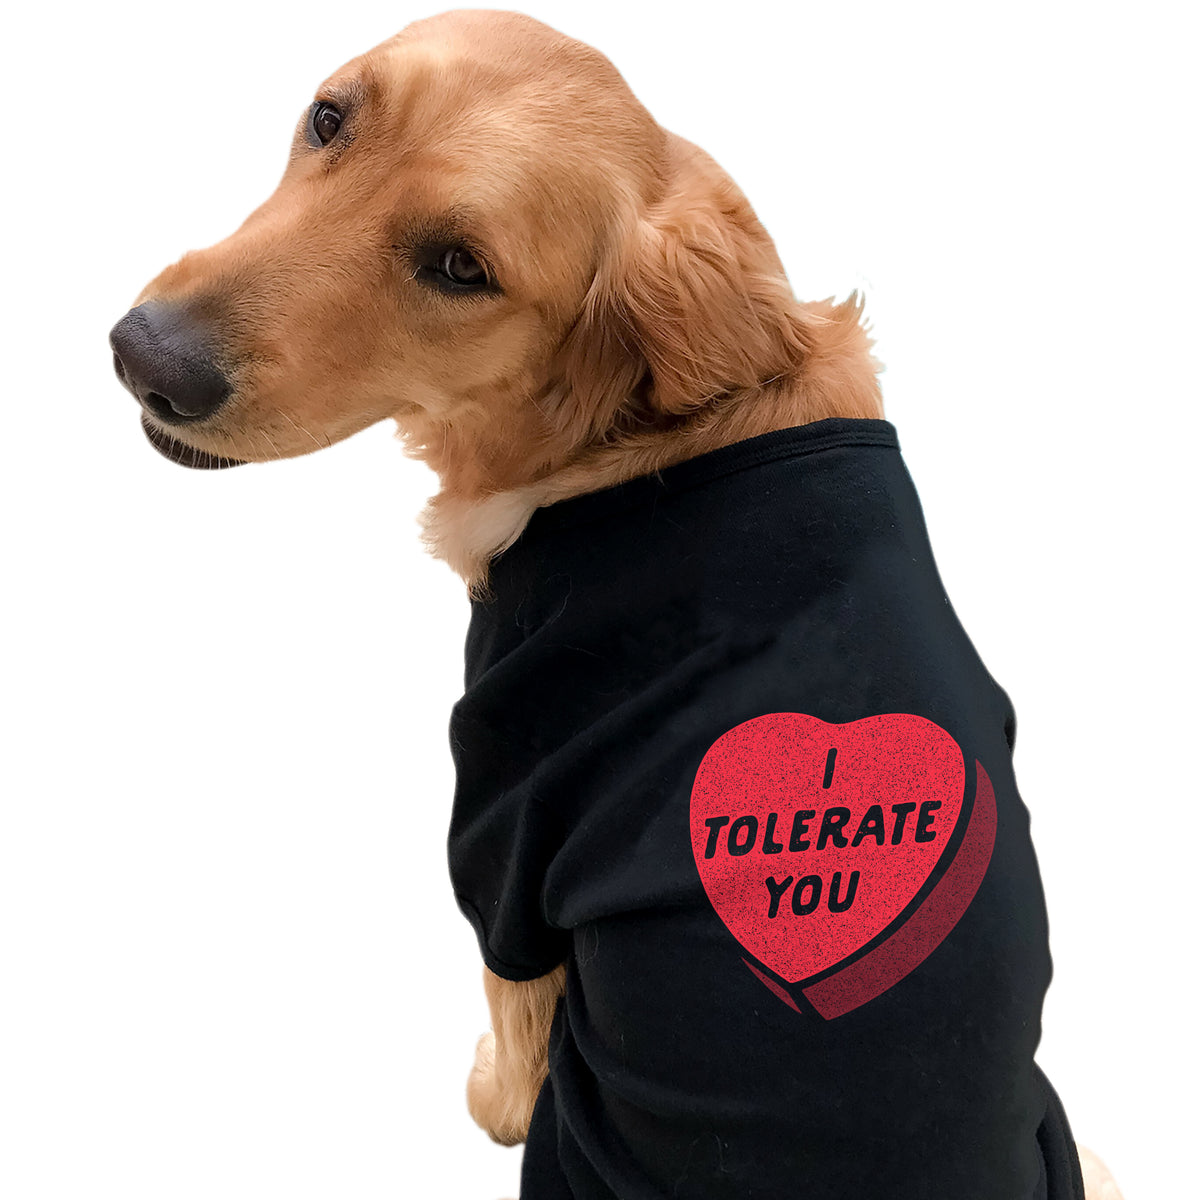 I Tolerate You Dog Shirt